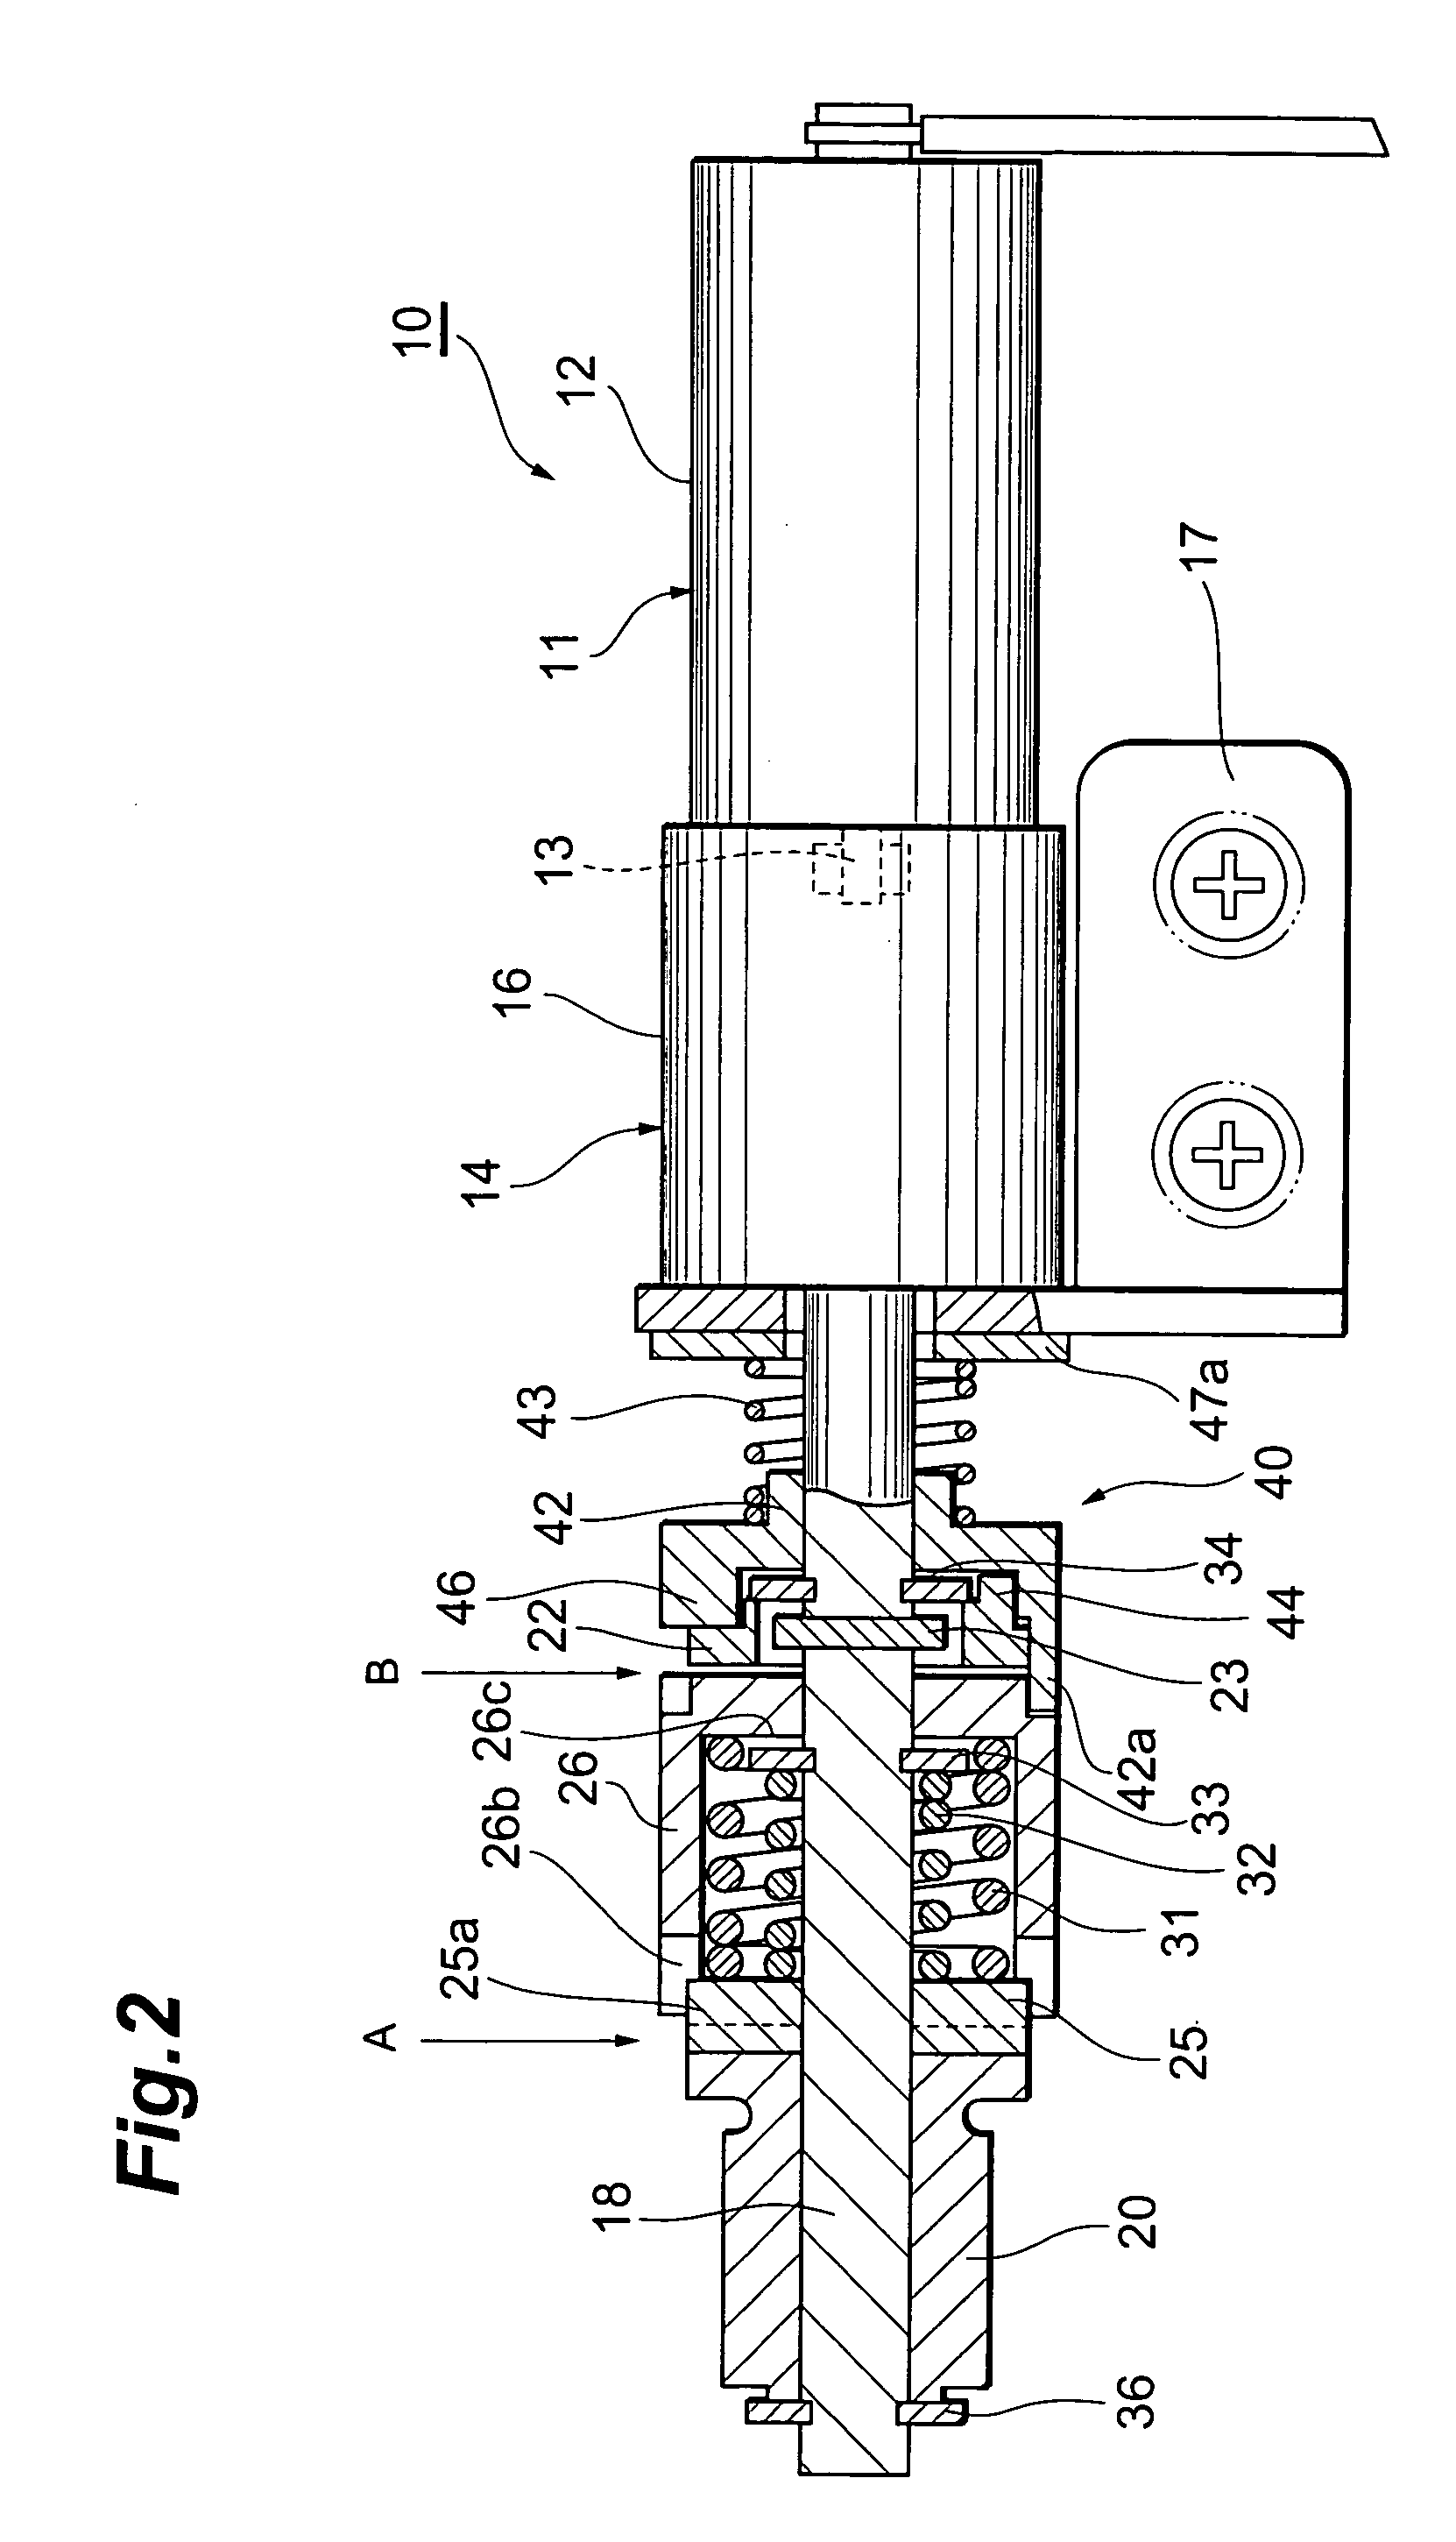 Electric motorized hinge apparatus